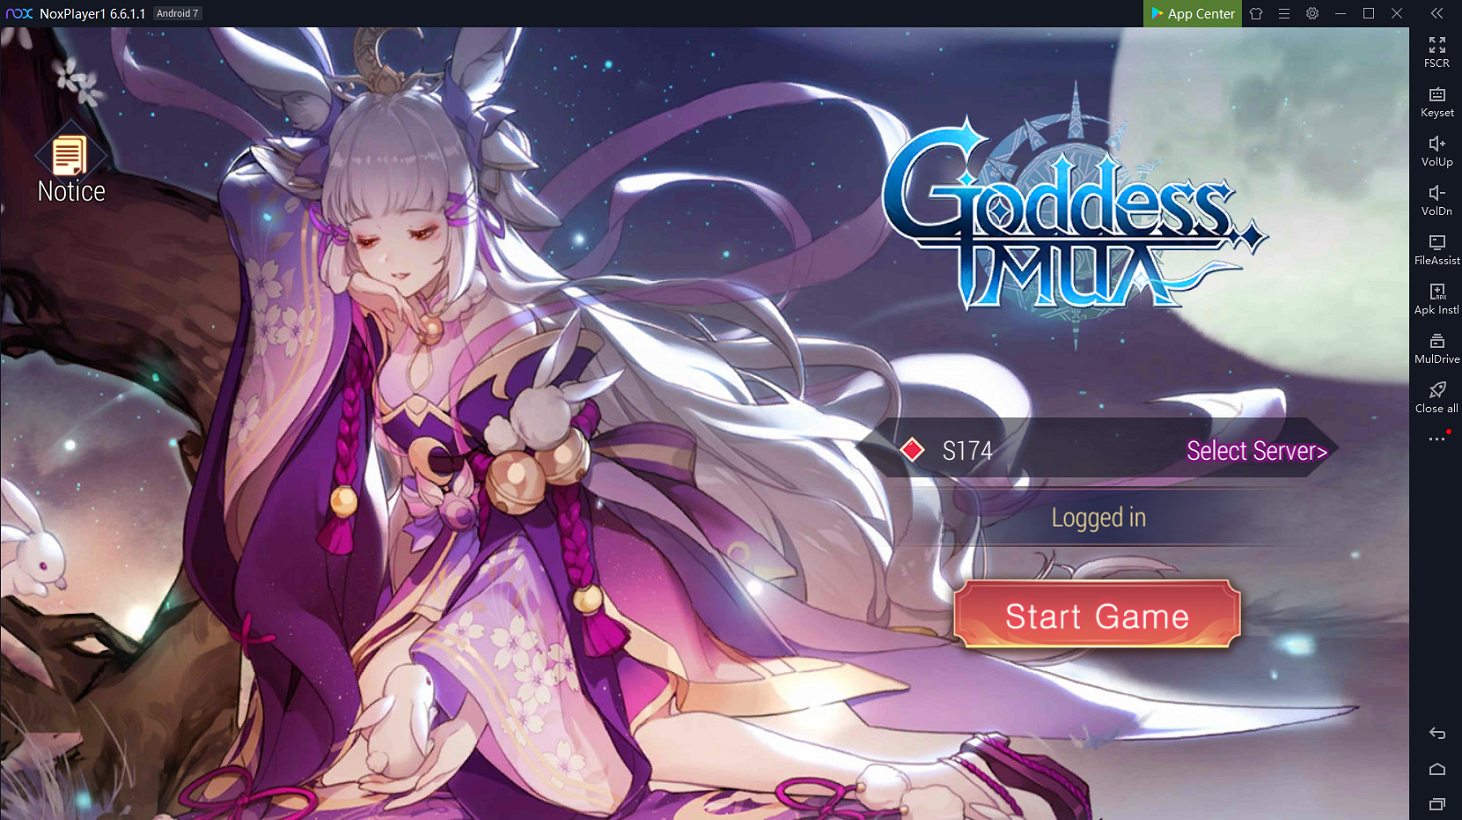 Goddess Android Game